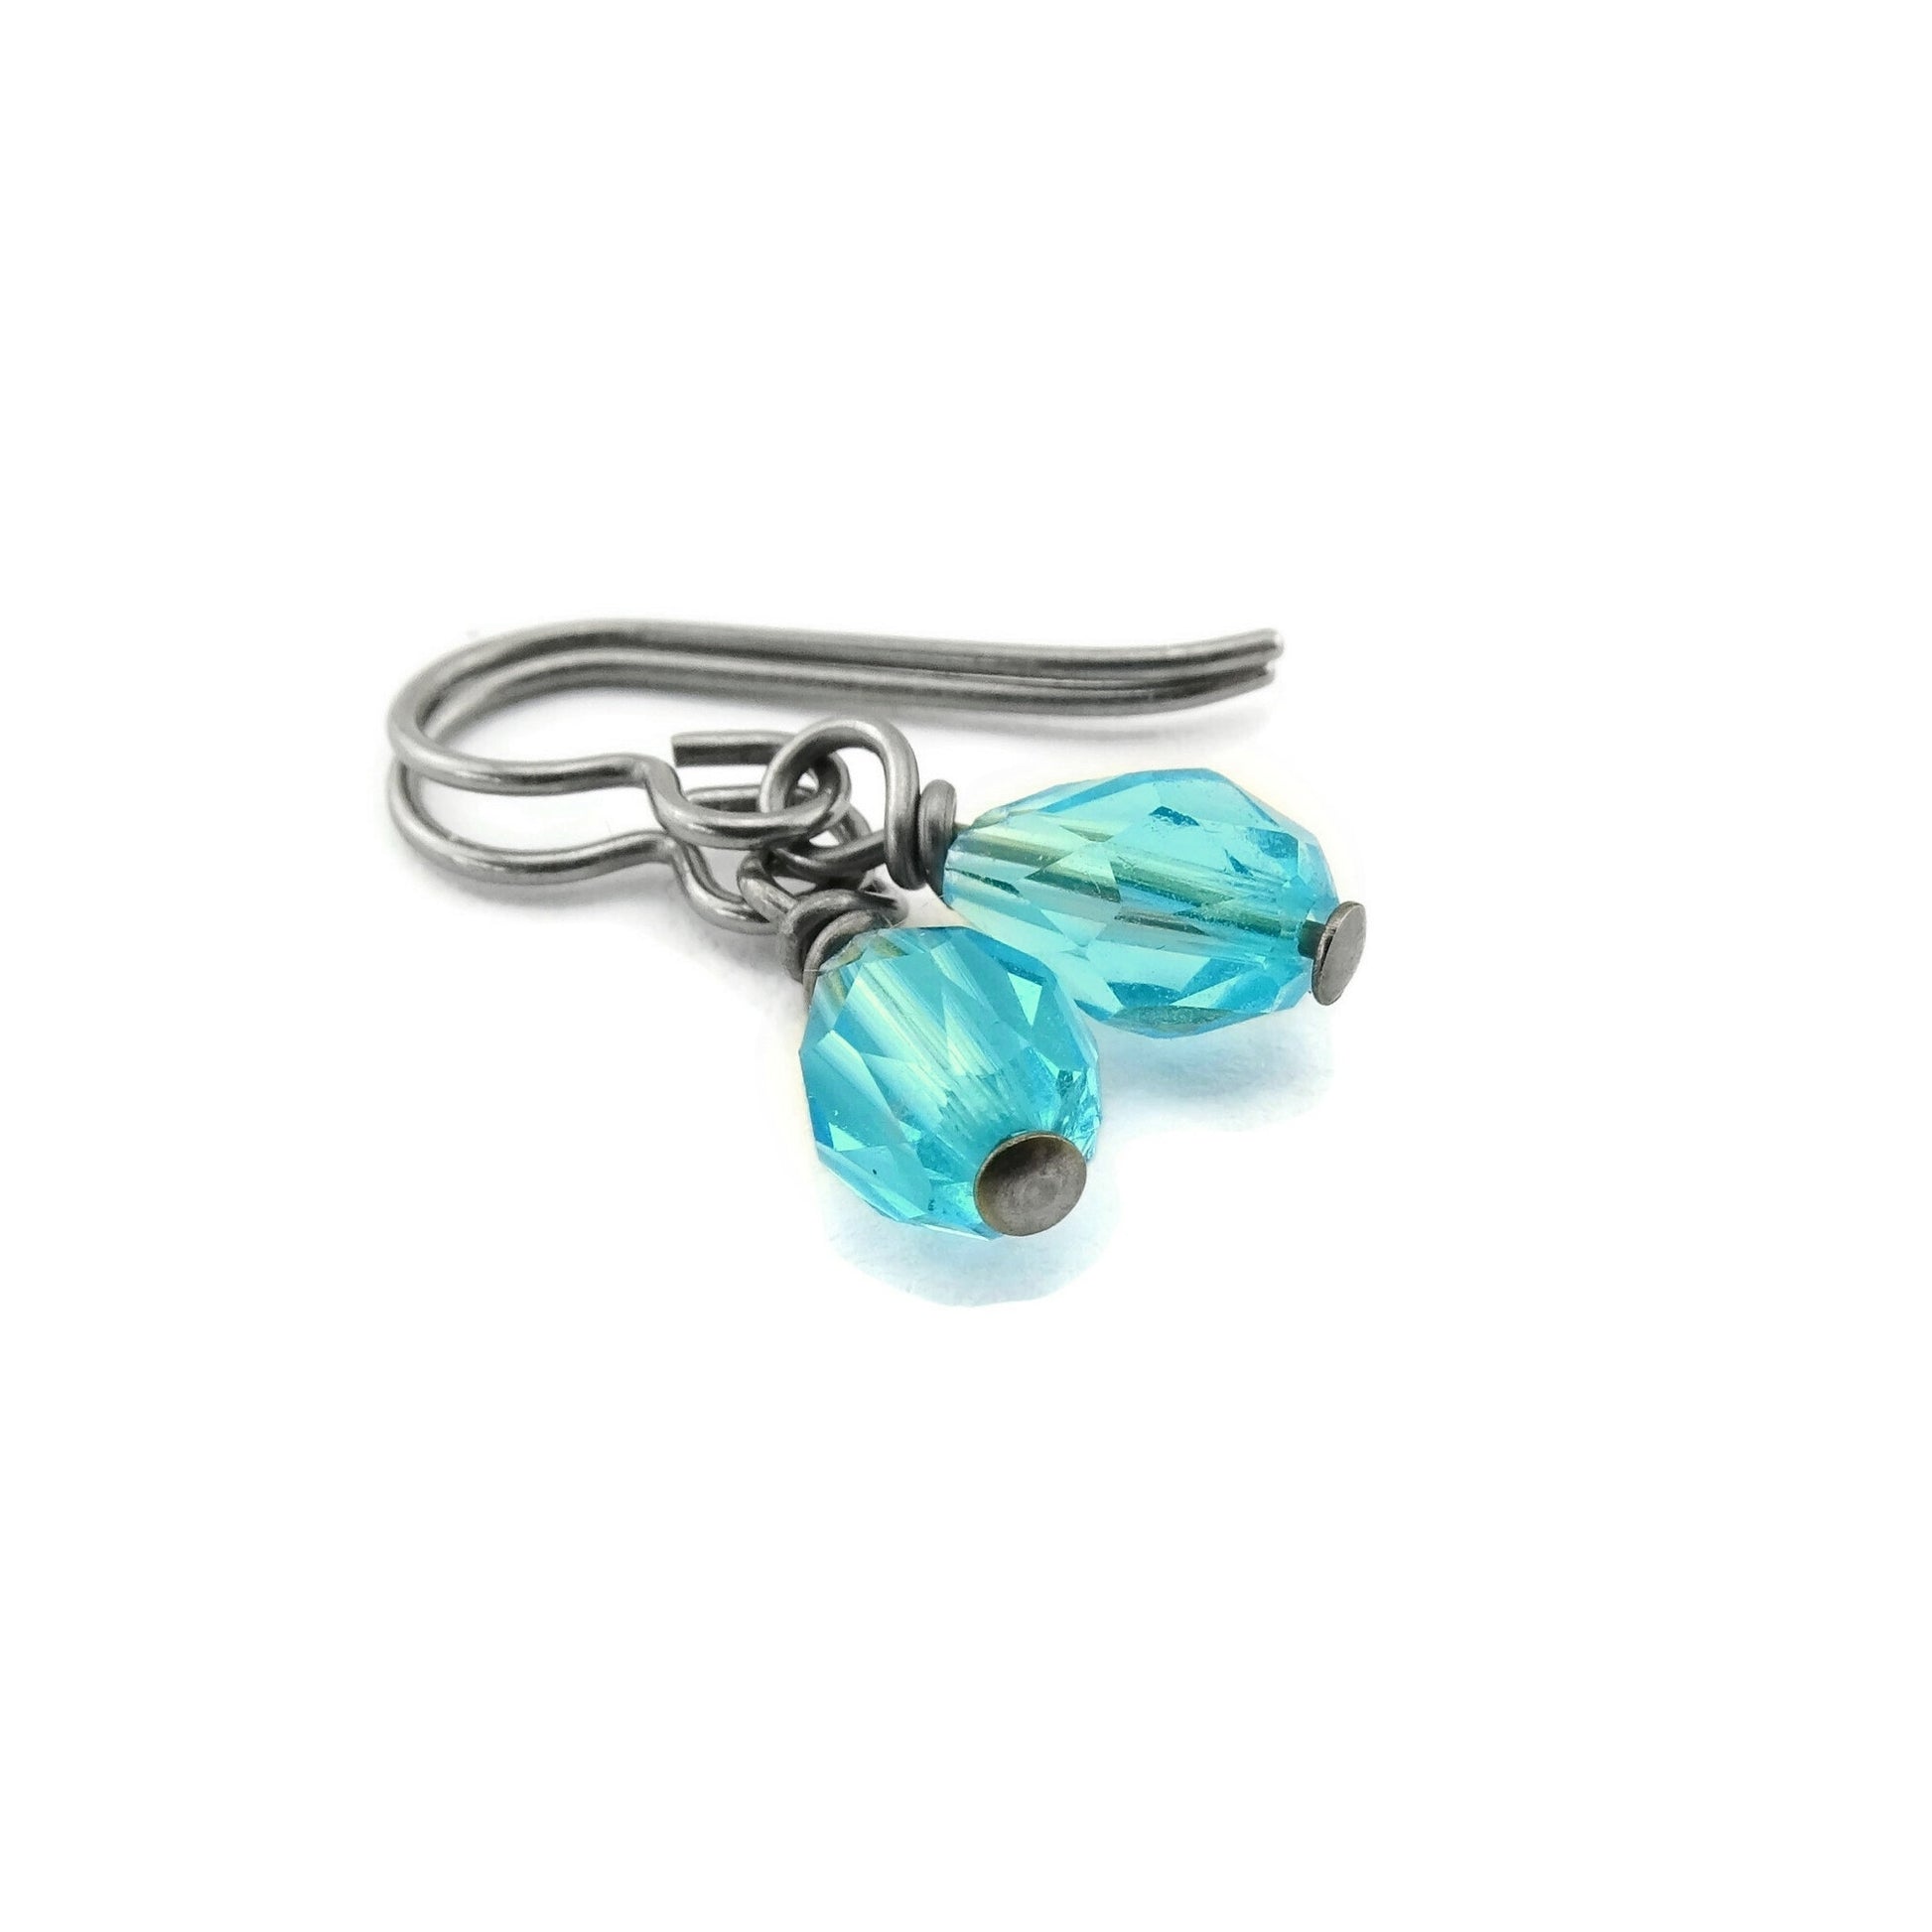 Light Turquoise Drop Titanium Earrings, Aqua Blue Teardrop Swarovski Crystal, Niobium Earrings for Sensitive Ears Nickel Free Hypoallergenic